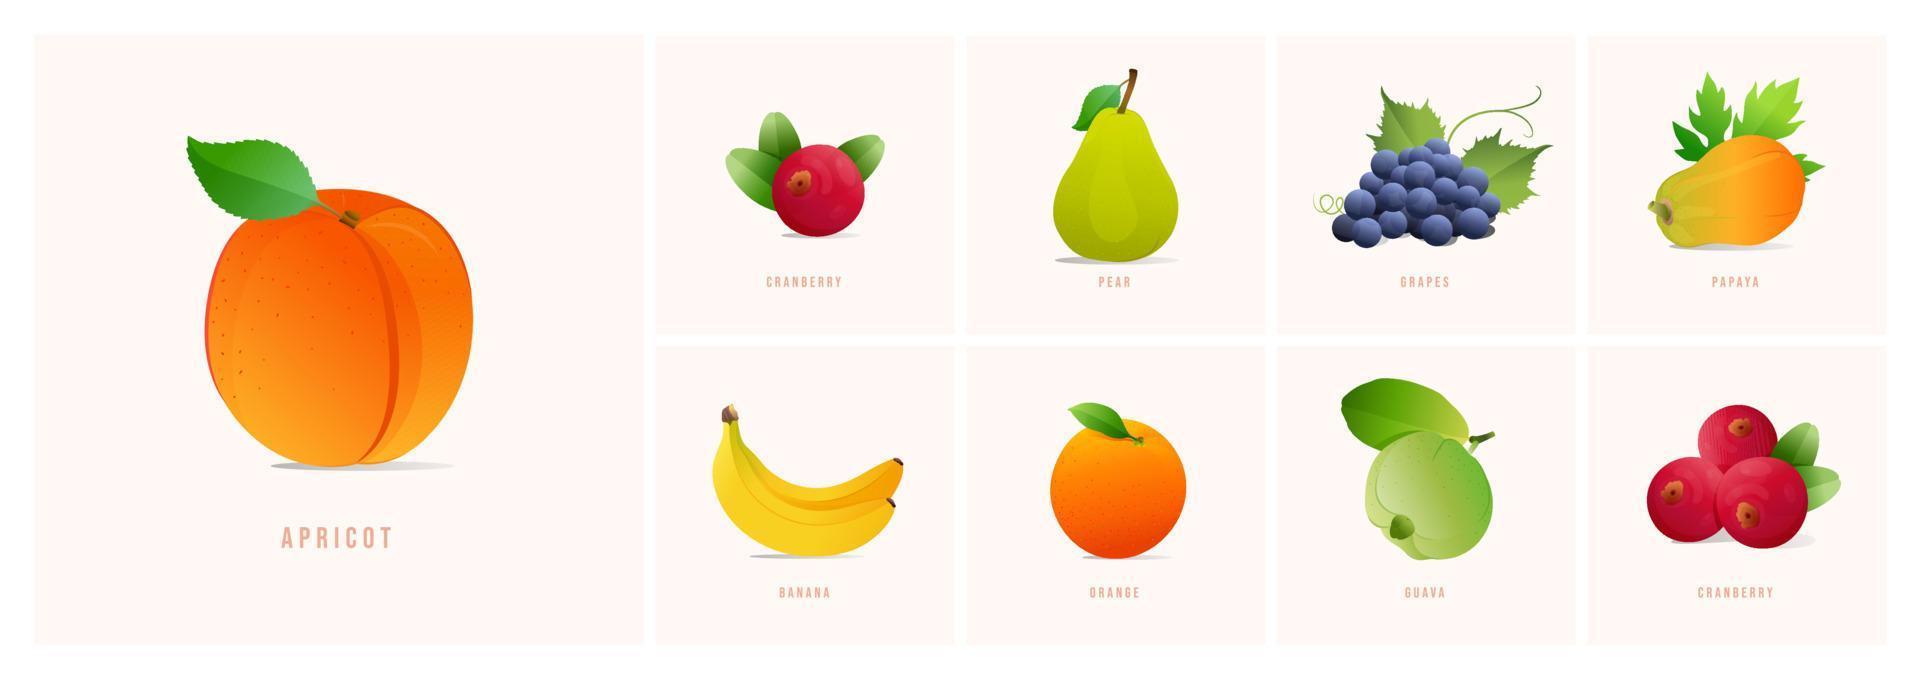 reeks van fruit, modern stijl vector illustraties. abrikoos, veenbes, banaan, druiven papaja, Peer, guave, oranje enz.